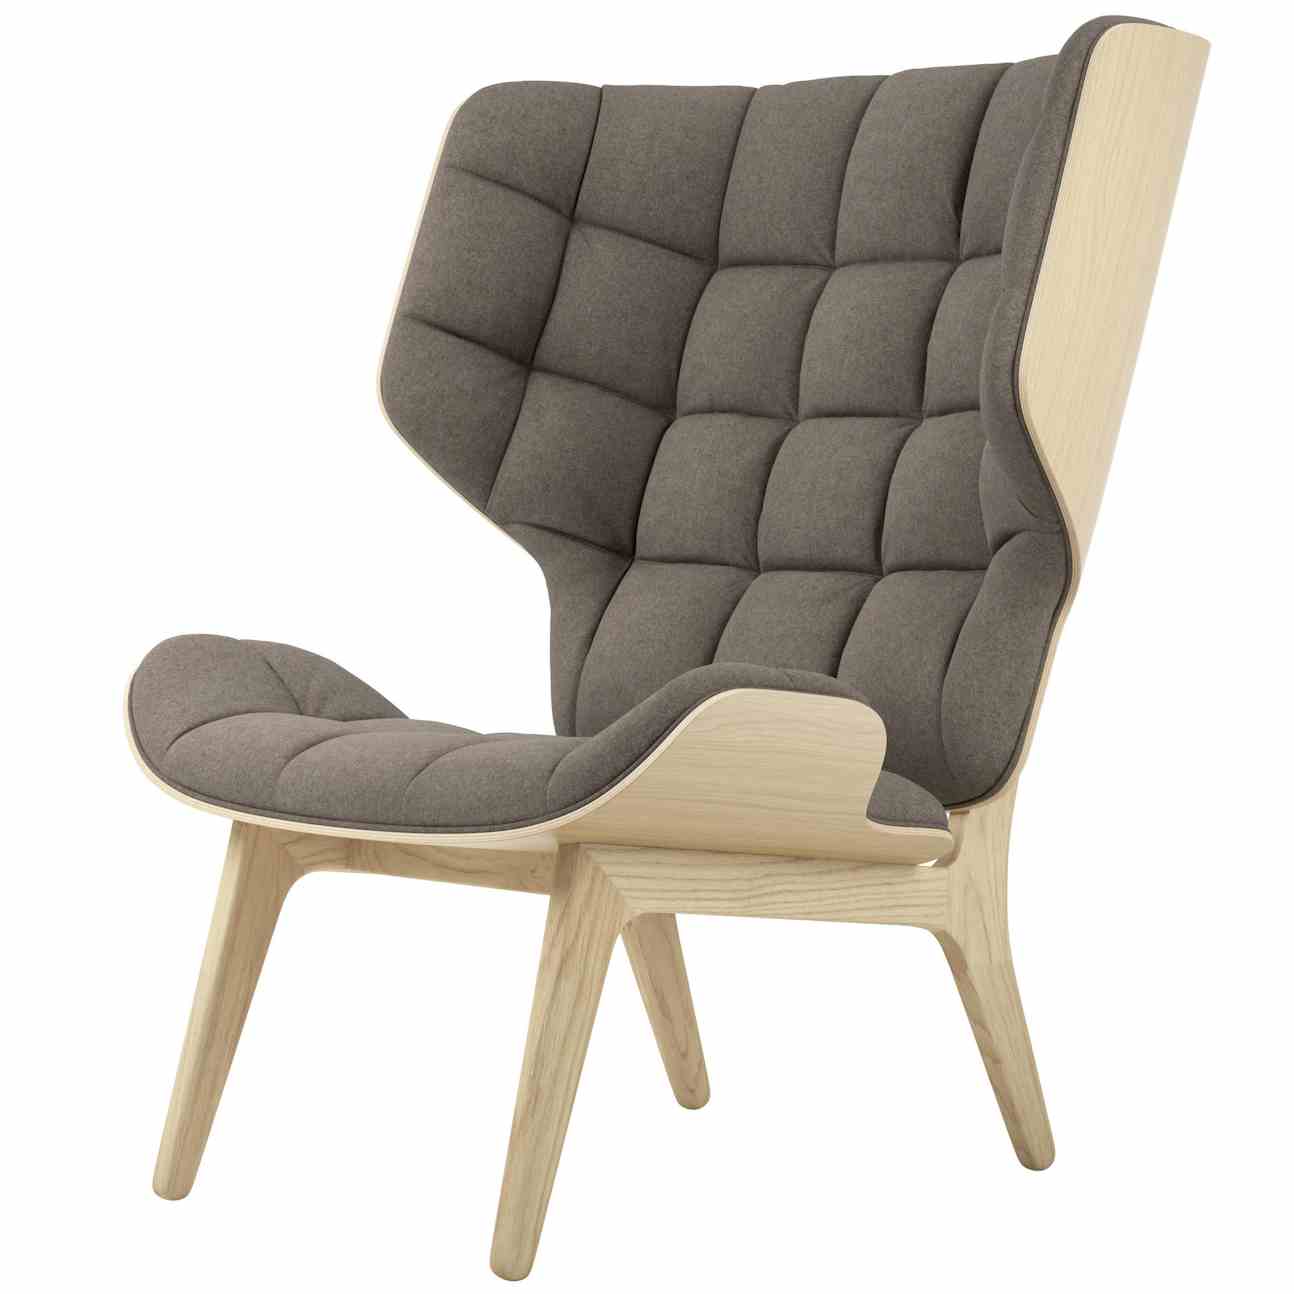 NORR11 mammoth chair oak haute living